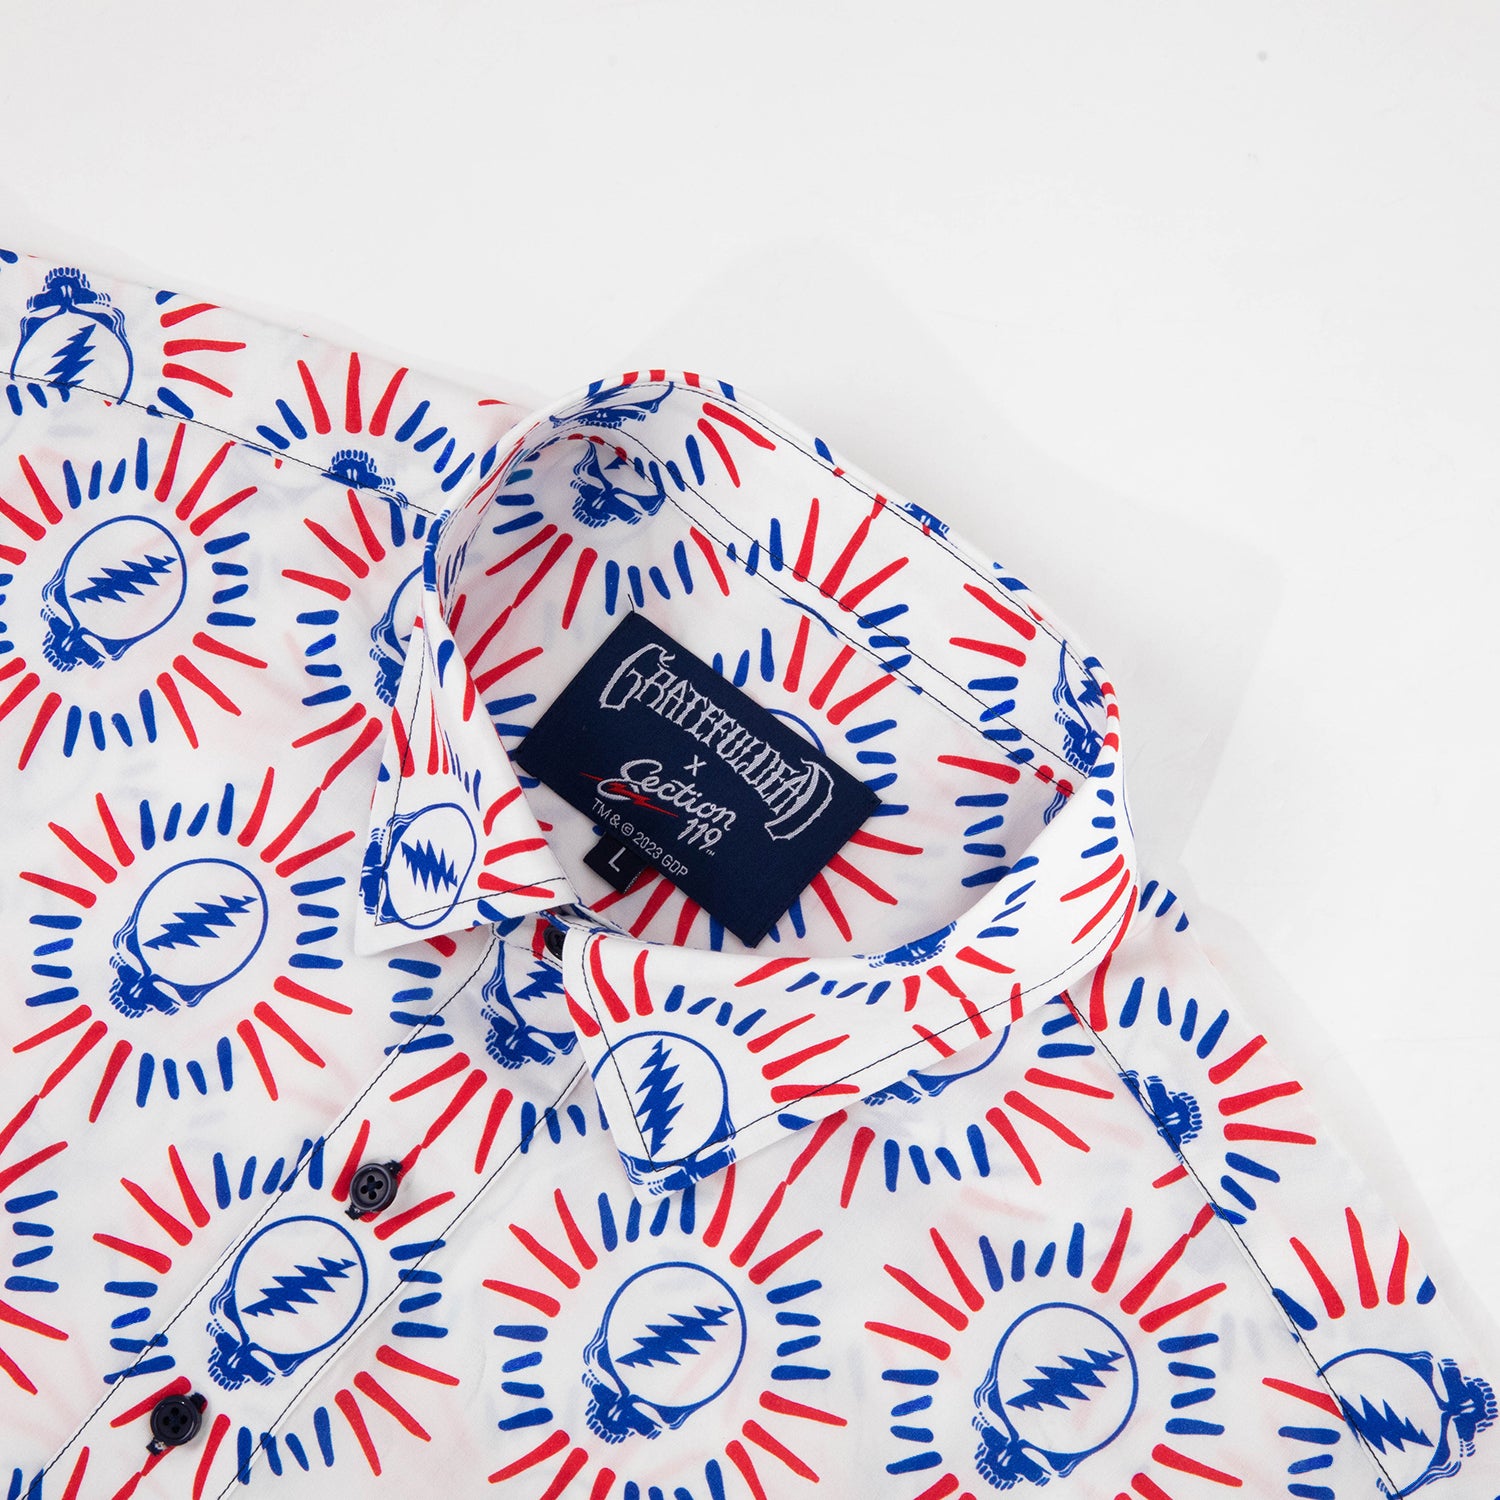 Grateful Dead Blue Tie Dye Sun Stealie Short-Sleeve Button Down - Section119, S